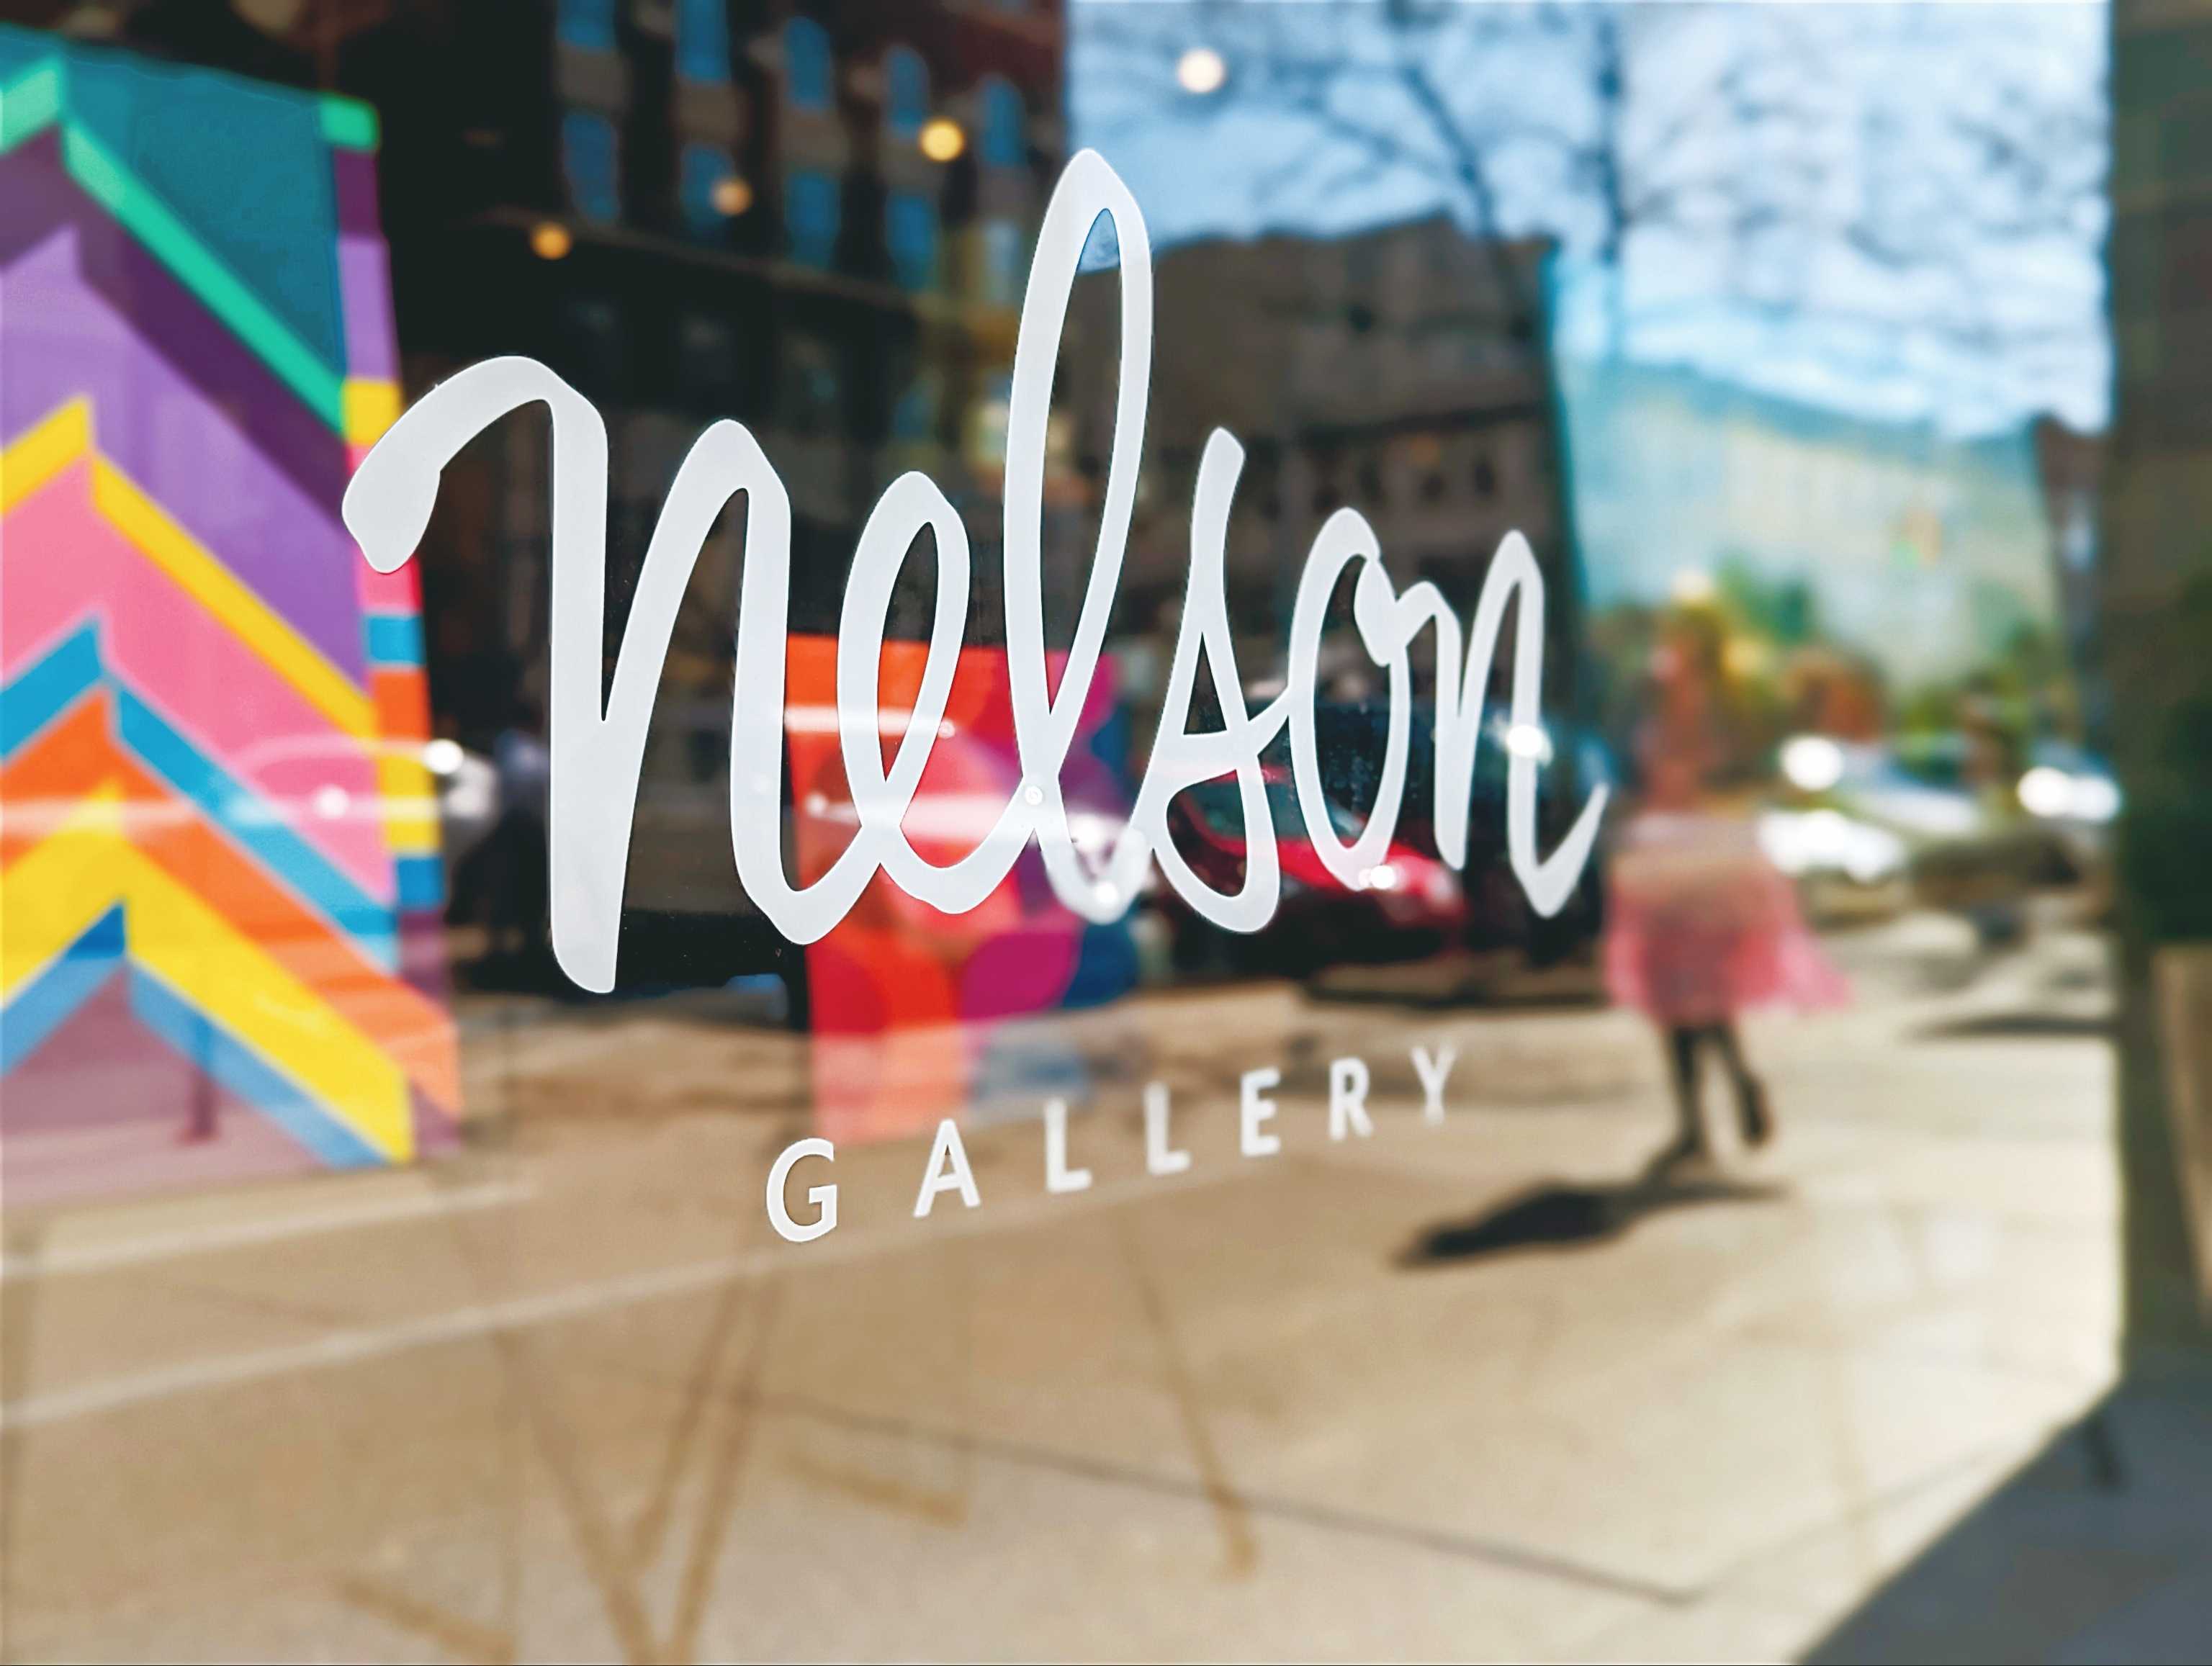 Nelson Gallery